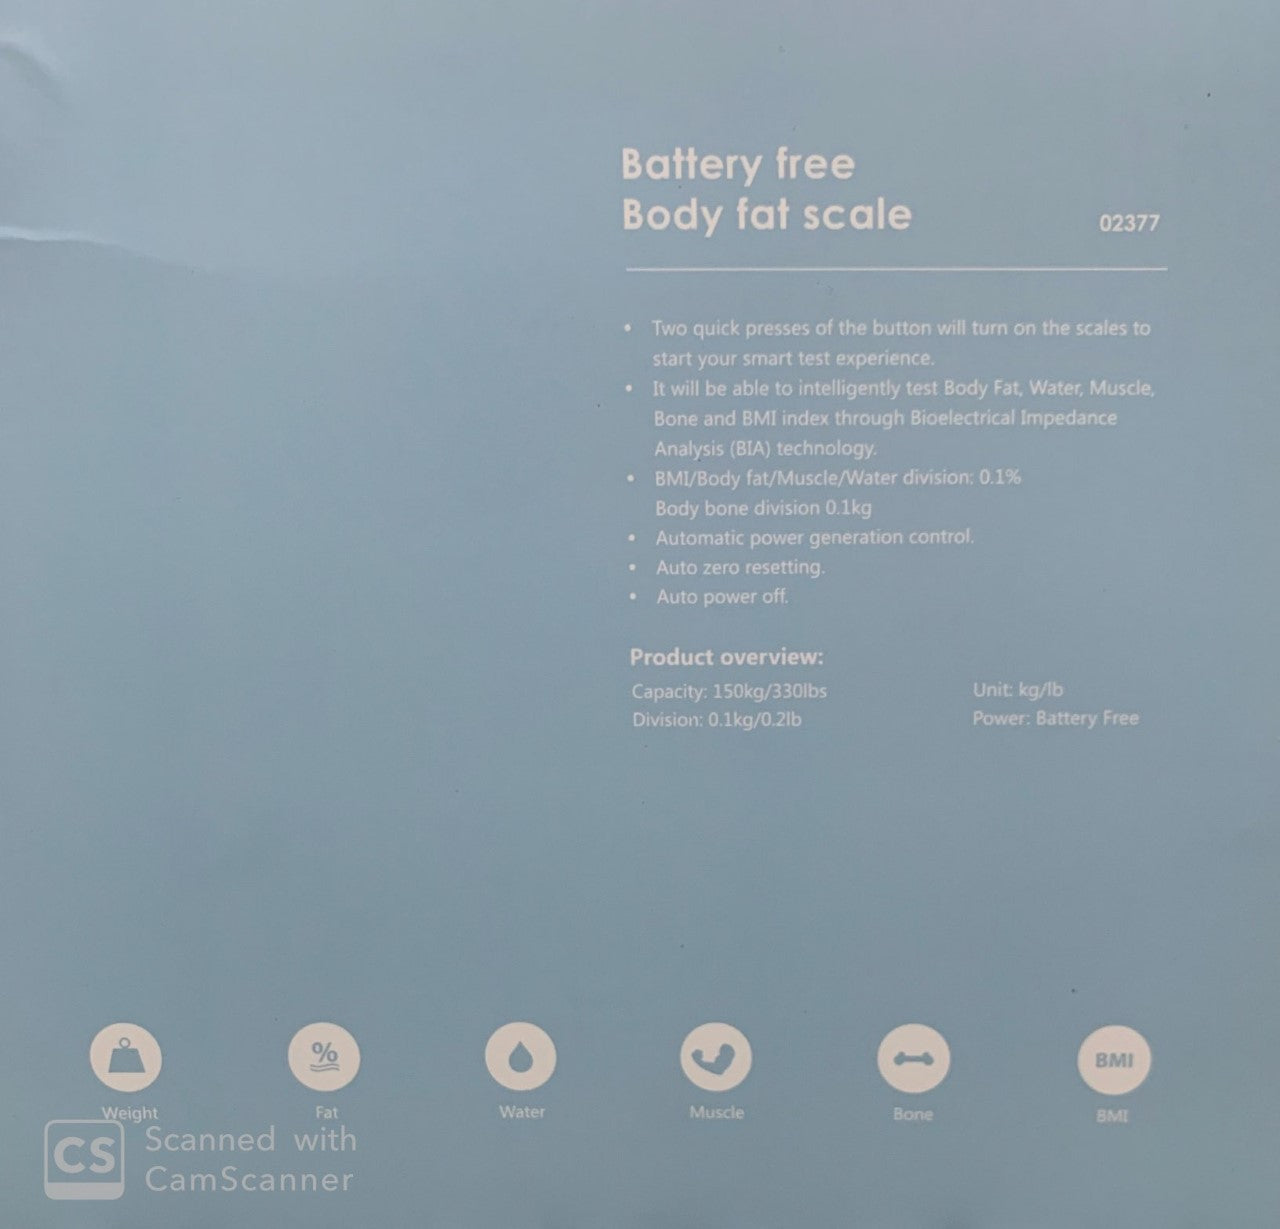 ACCOSCA Battery Free Body Fat Scale